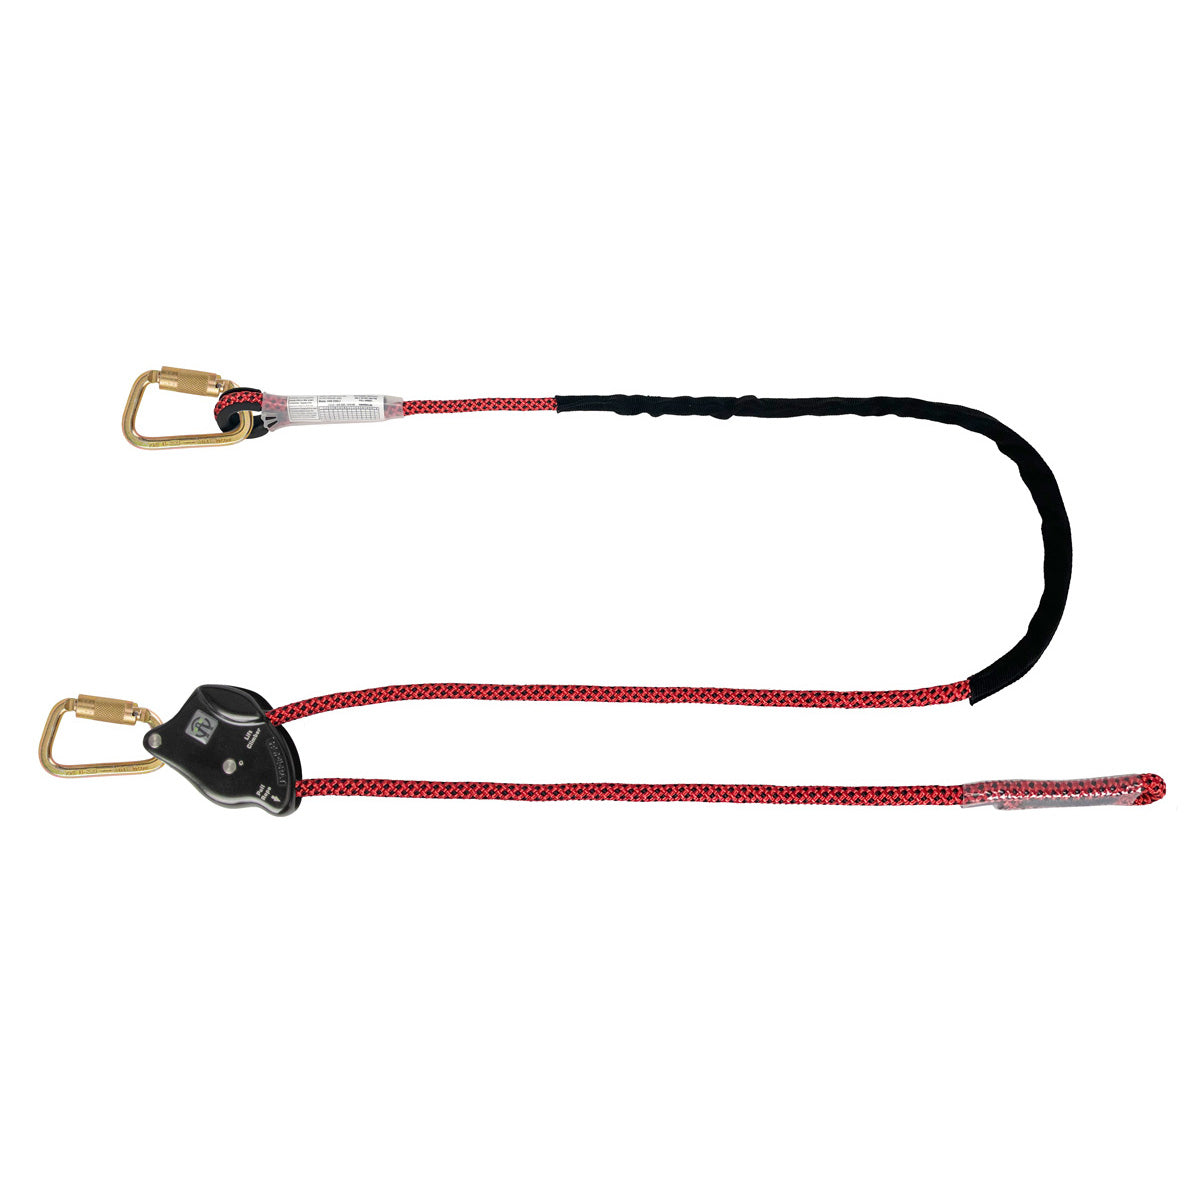 6.5' Rope Positioning Lanyard: Rope Adjuster, Carabiners (B&W)